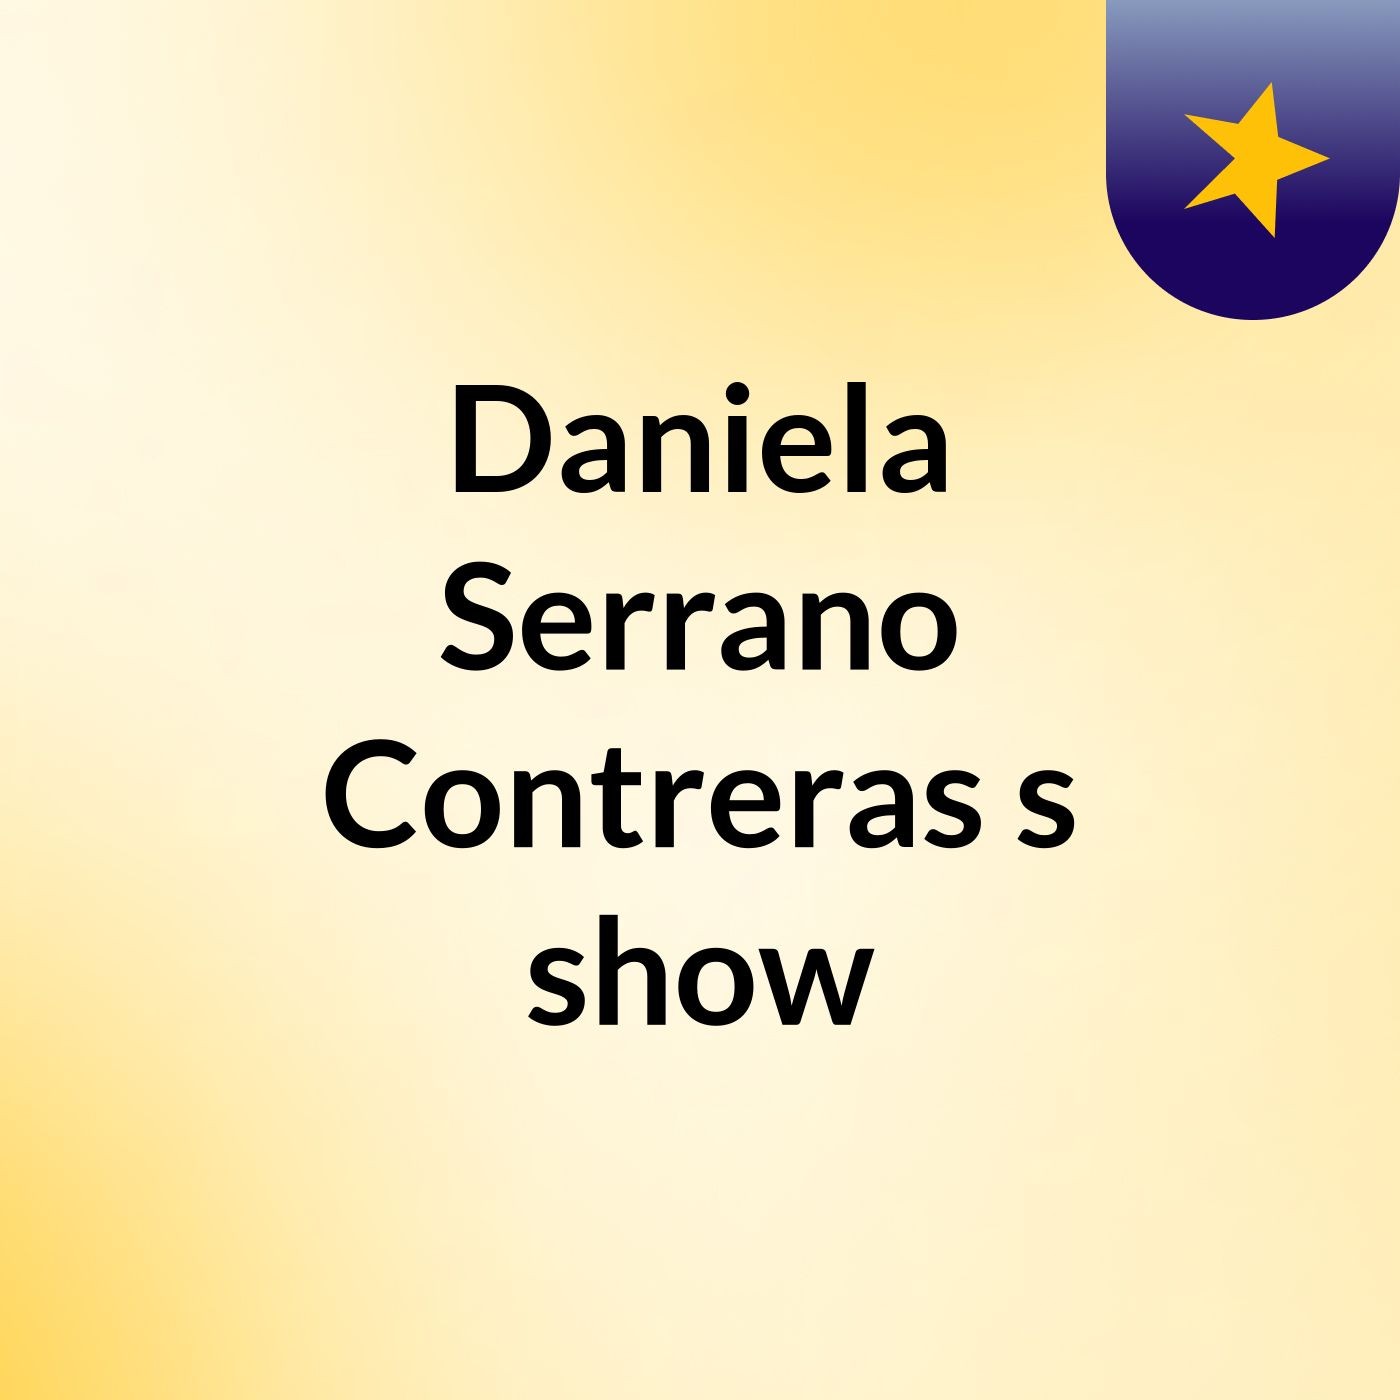 Daniela Serrano Contreras's show